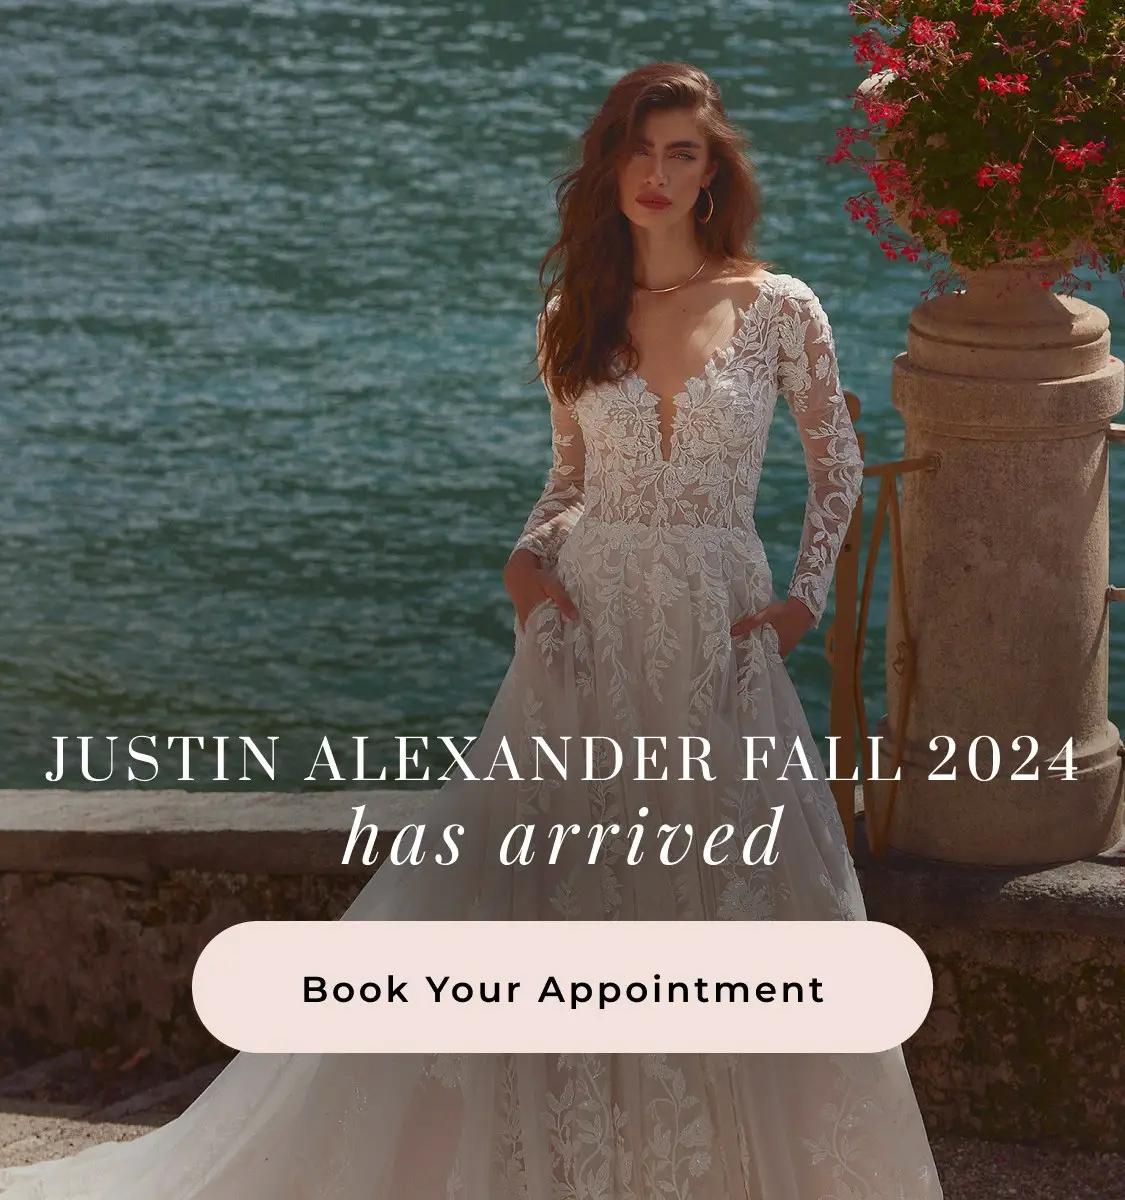 Justin Alexander Fall 2024 Banner Mobile